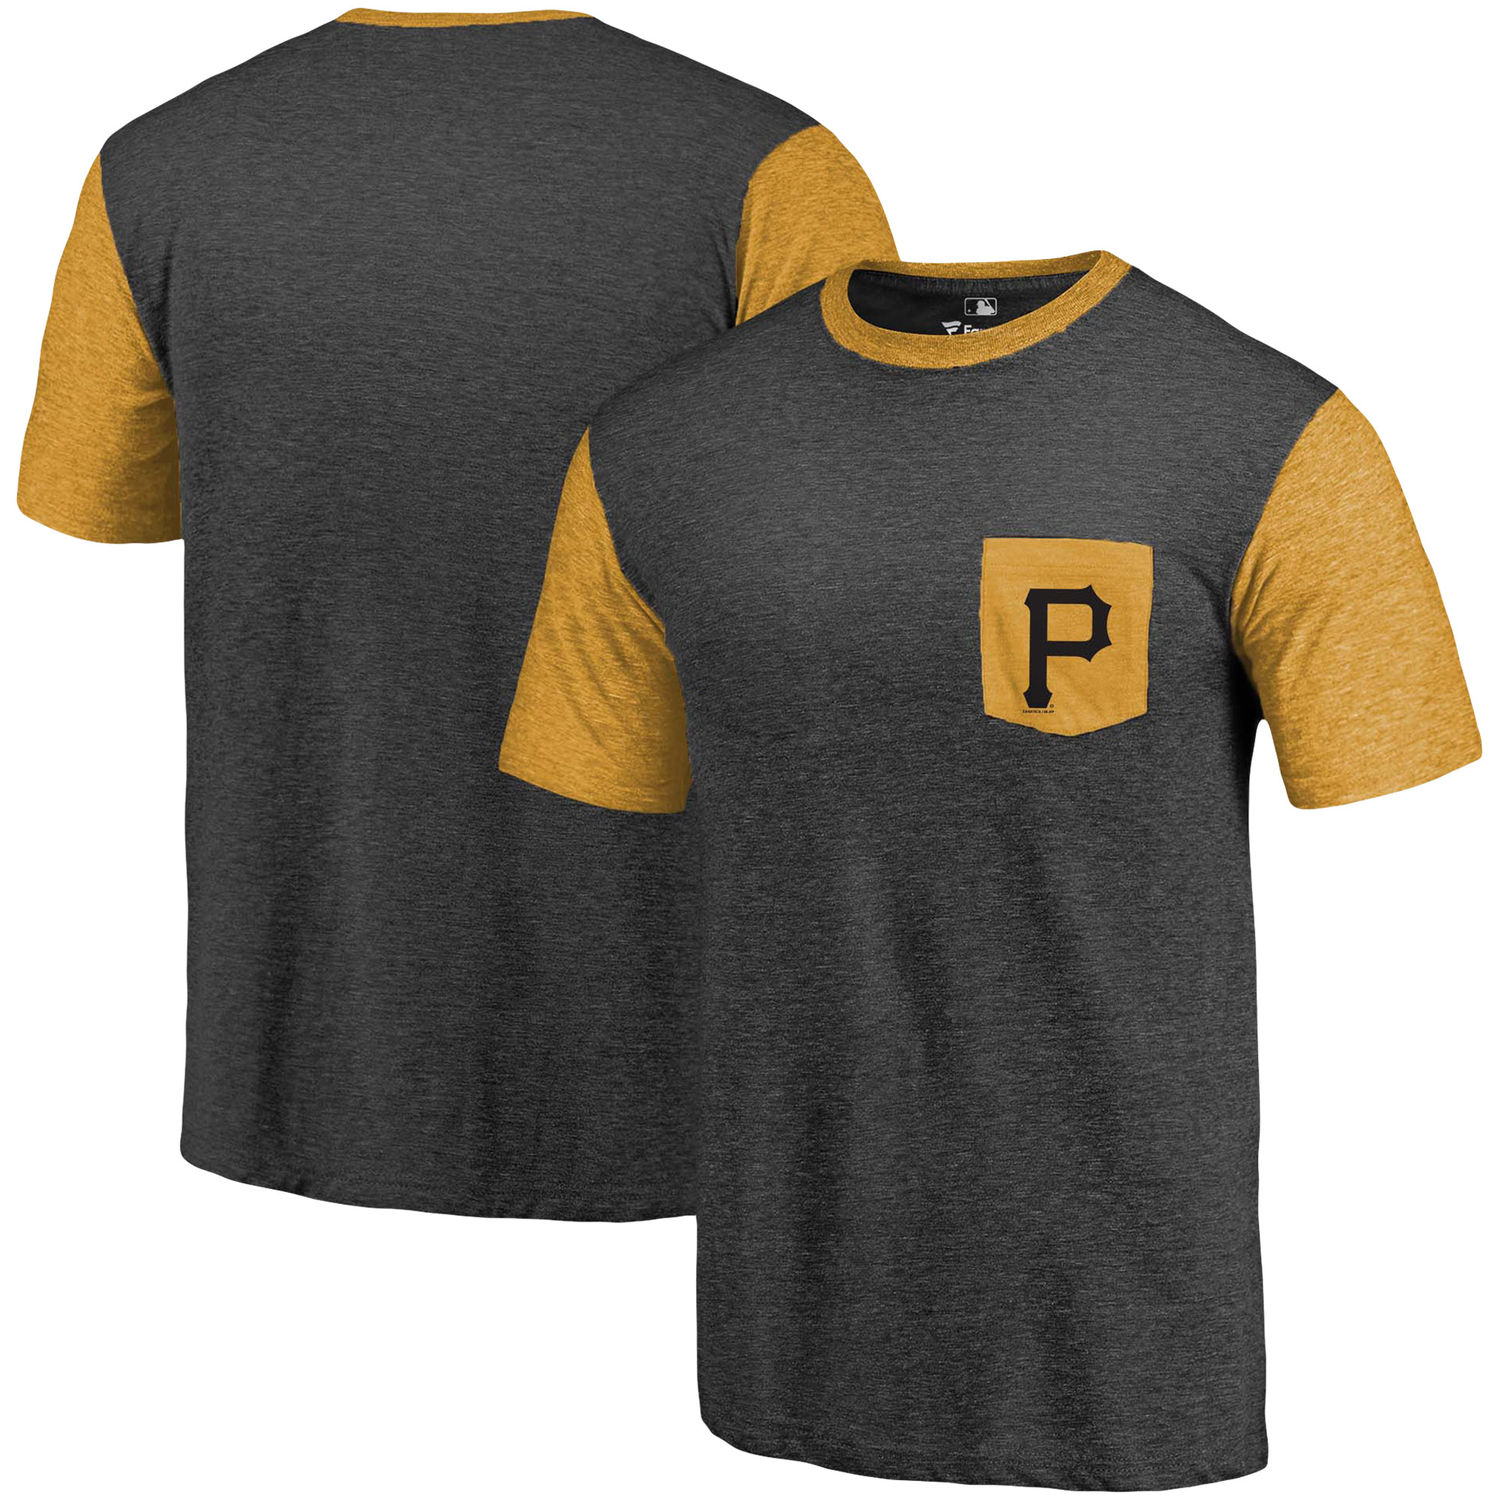 Men's Pittsburgh Pirates Fanatics Branded Black/Gold Refresh Pocket T-Shirt